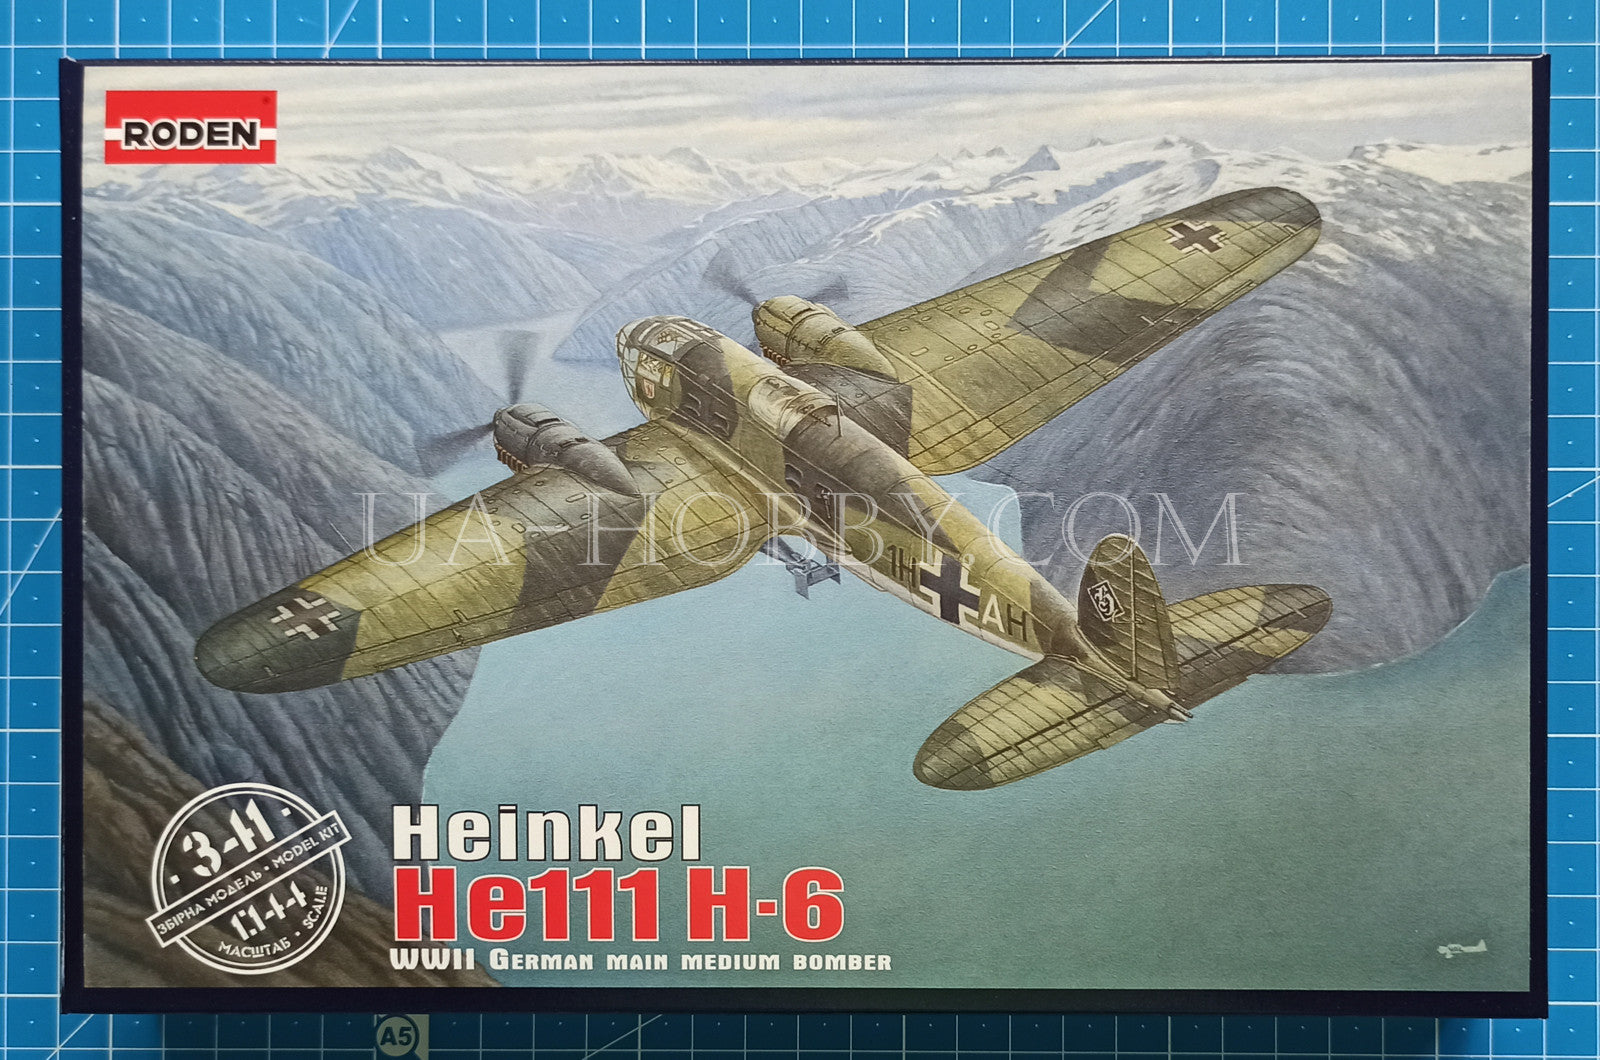 heinkel he 111 model kit